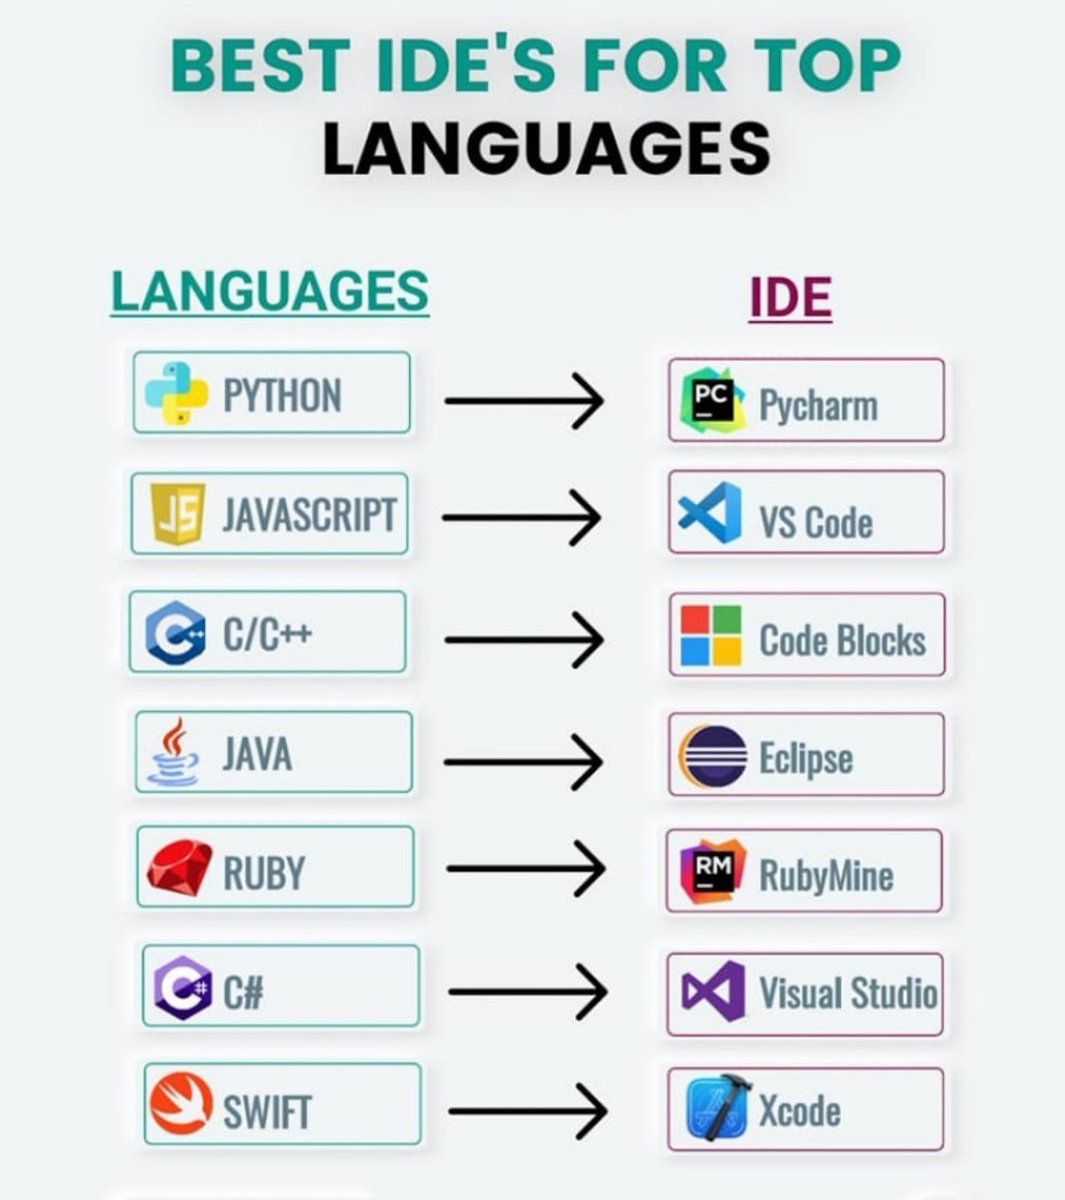 ⚡️ Best IDEs for Top Languages #DataScience #Developer #AI #ML #MachineLearning #IoT #IIoT #IoTPL #IoTCL #BigData #Python #CloudComputing #AWS #blockchain #coding #programming #100daysofcode #DEVCommunity #STEM #WomenWhoCode #webdevelopment #gamedev #Software #tech #Code #DevOps